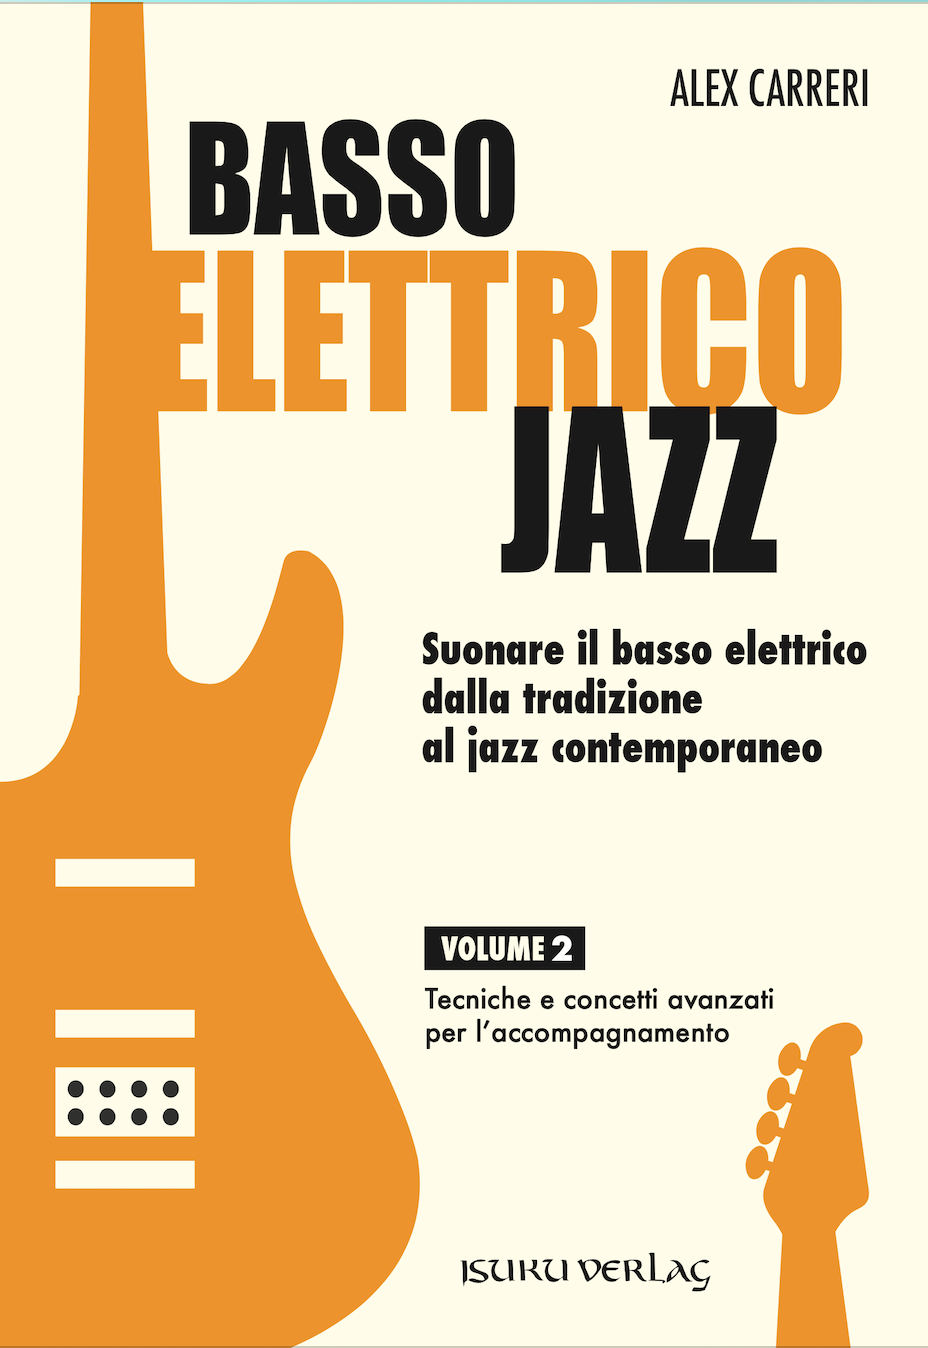 Basso elettrico jazz Volume 2